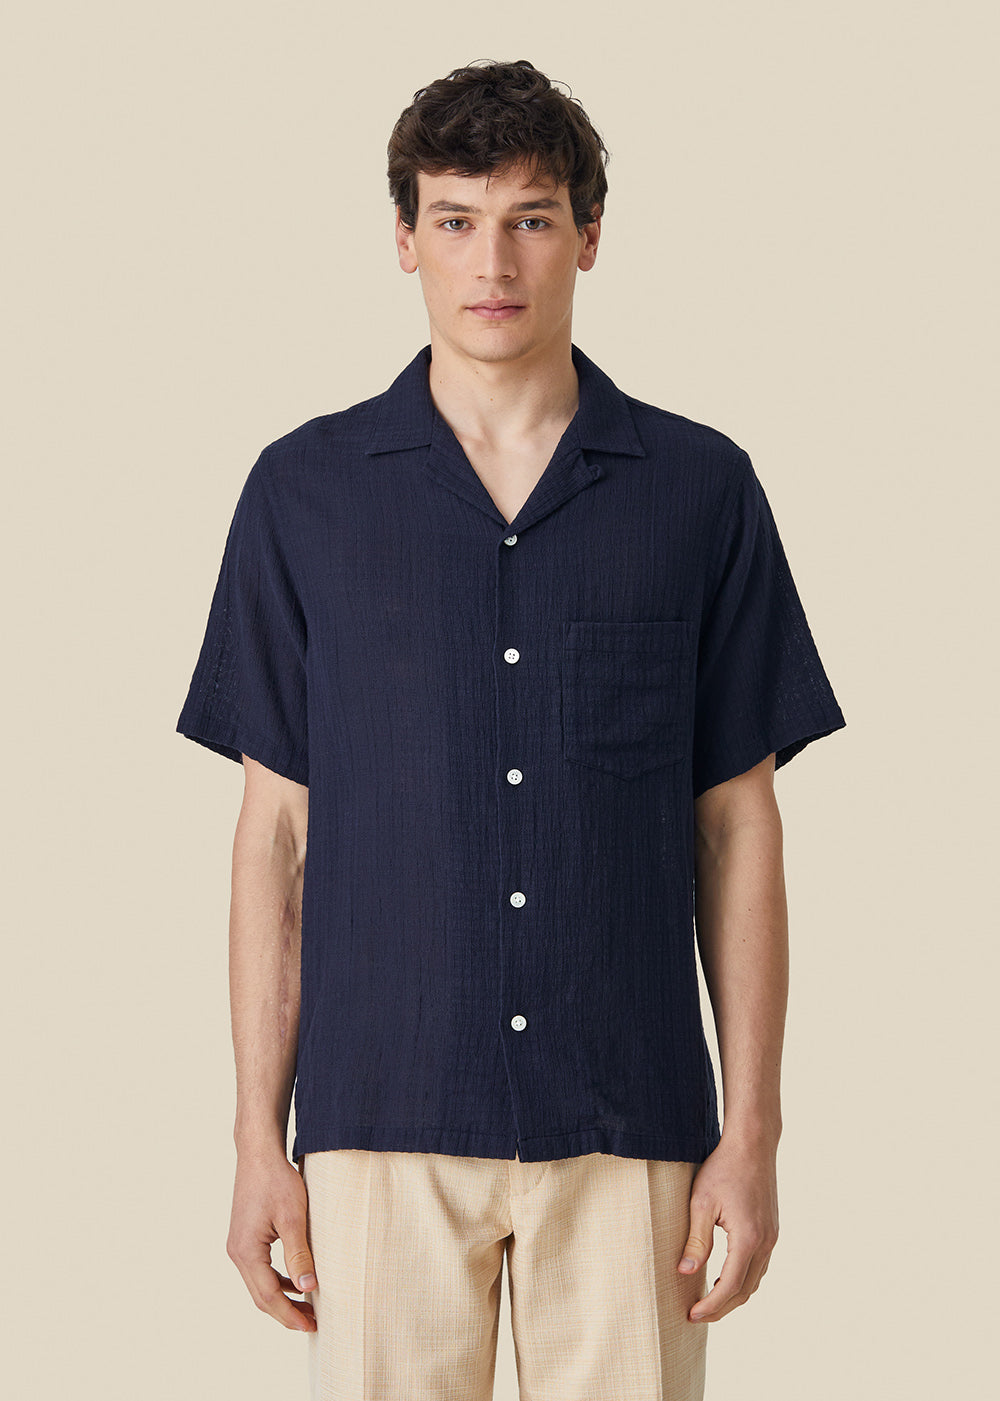 Grain Cotton Short Sleeve Shirt - Navy - Portuguese Flannel - Danali